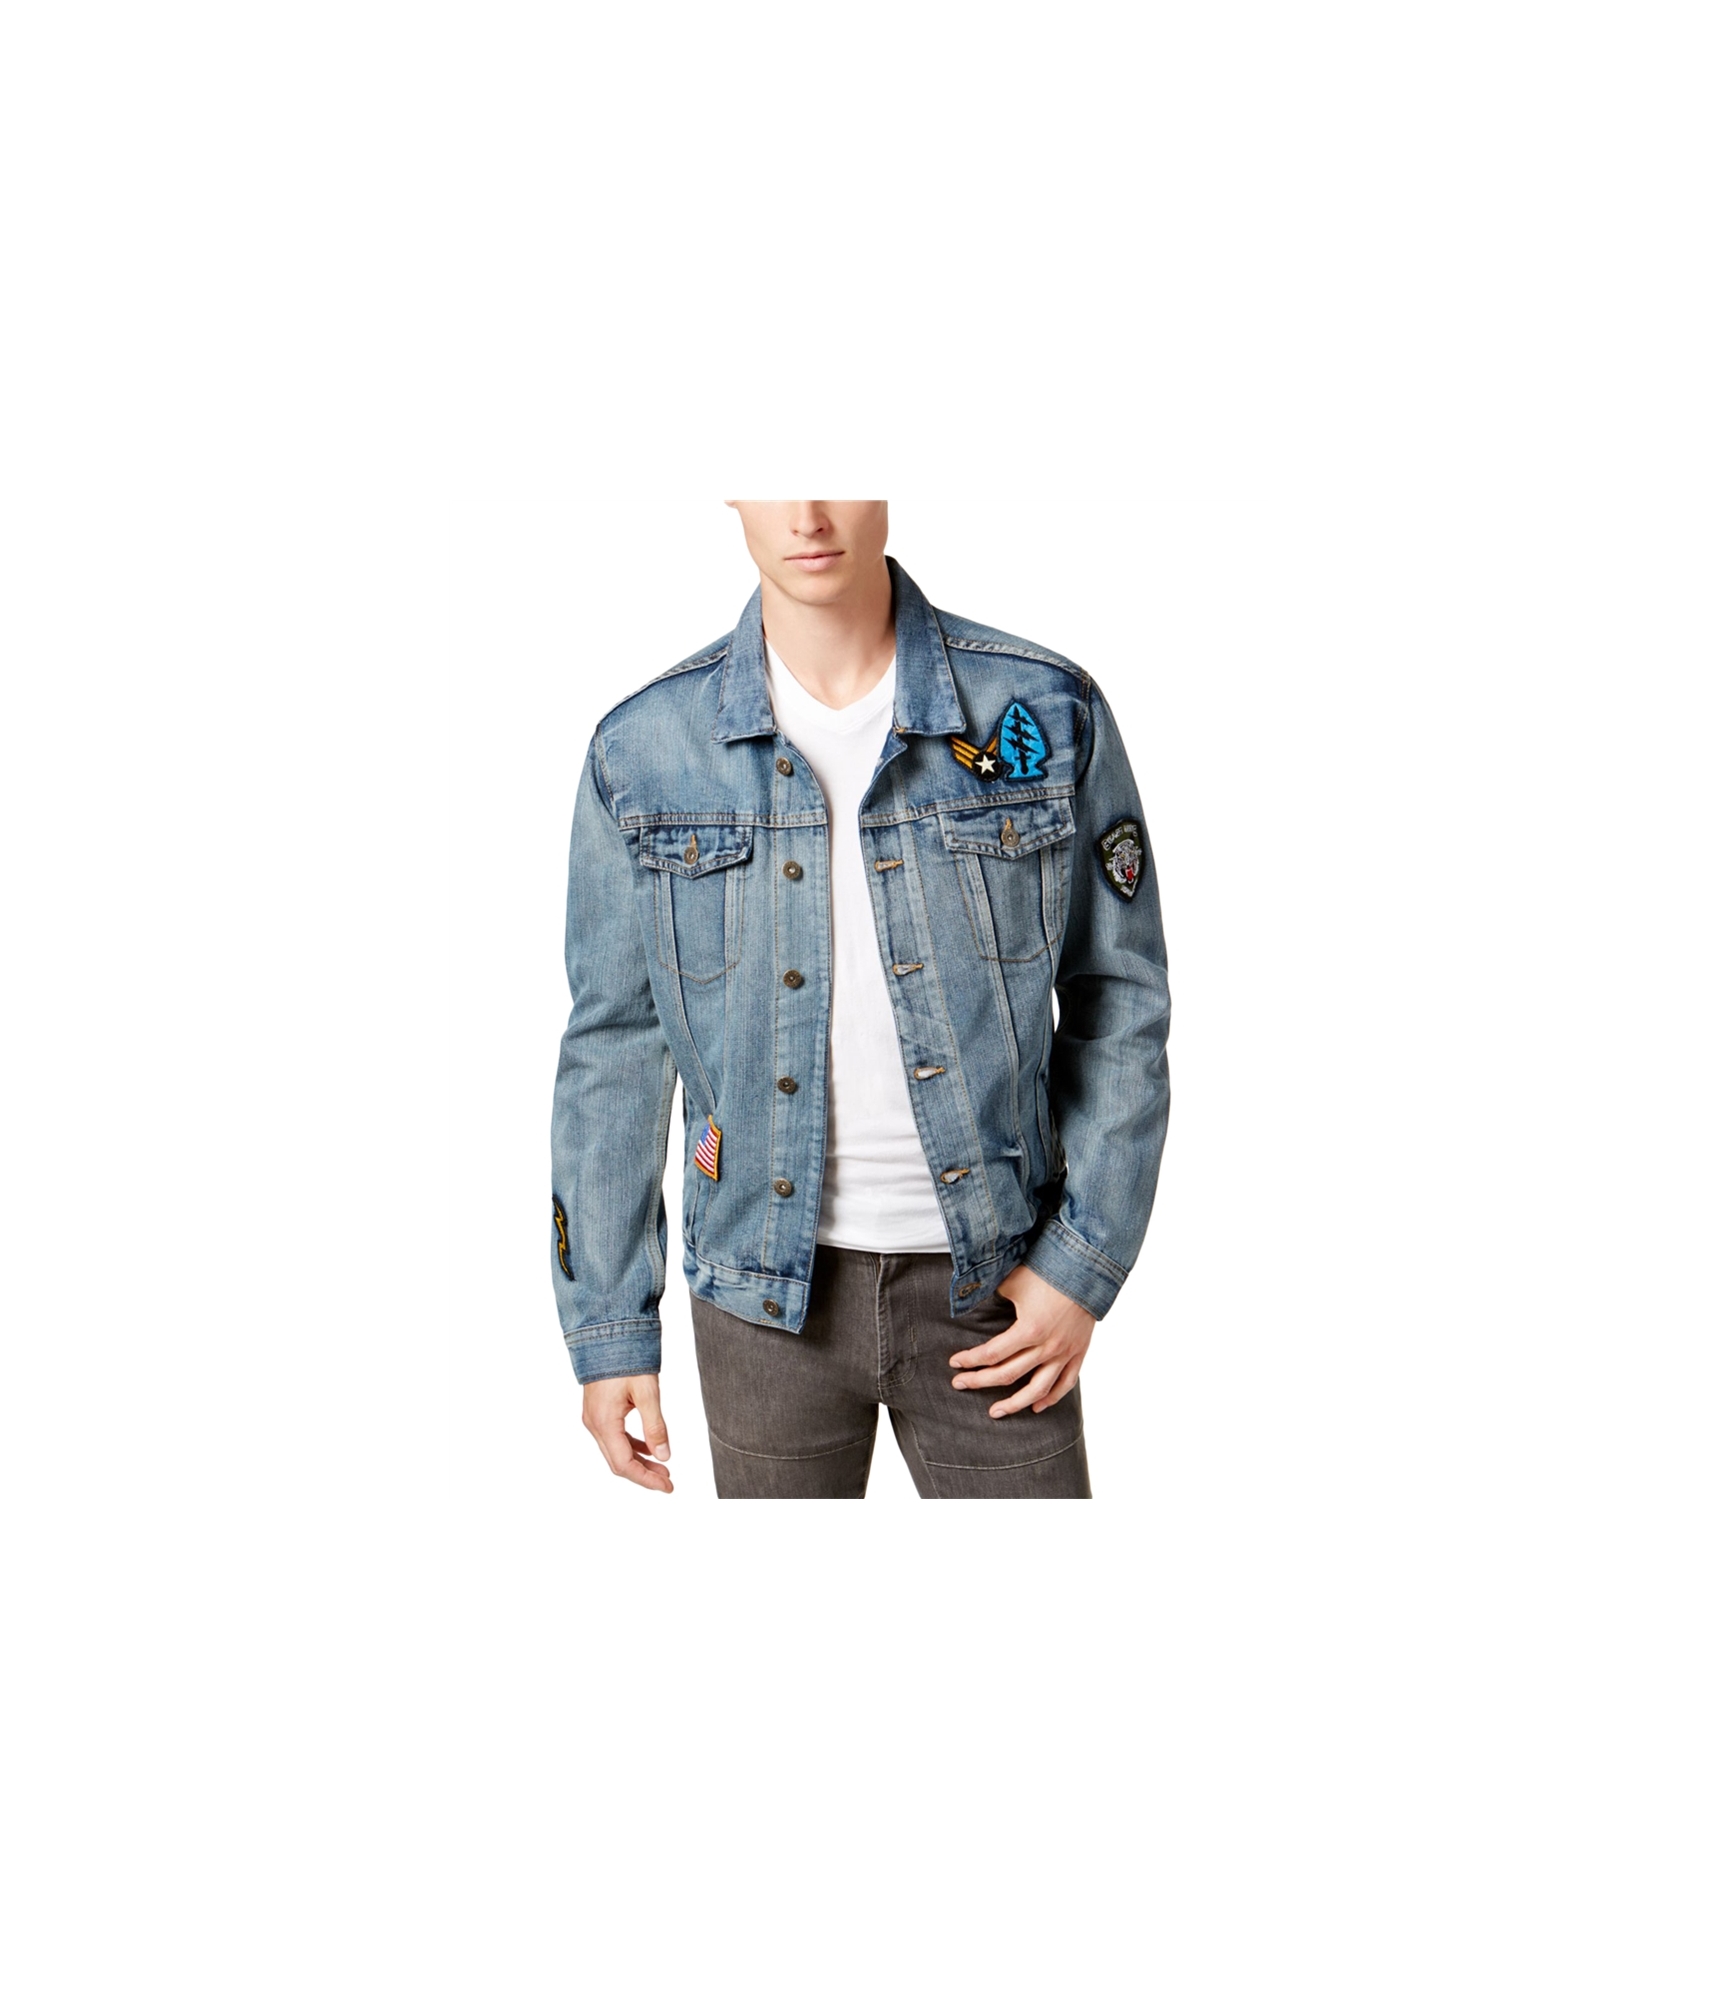 PREME Destructed Denim Jacket - Men's Coats/Jackets in Indigo | Buckle